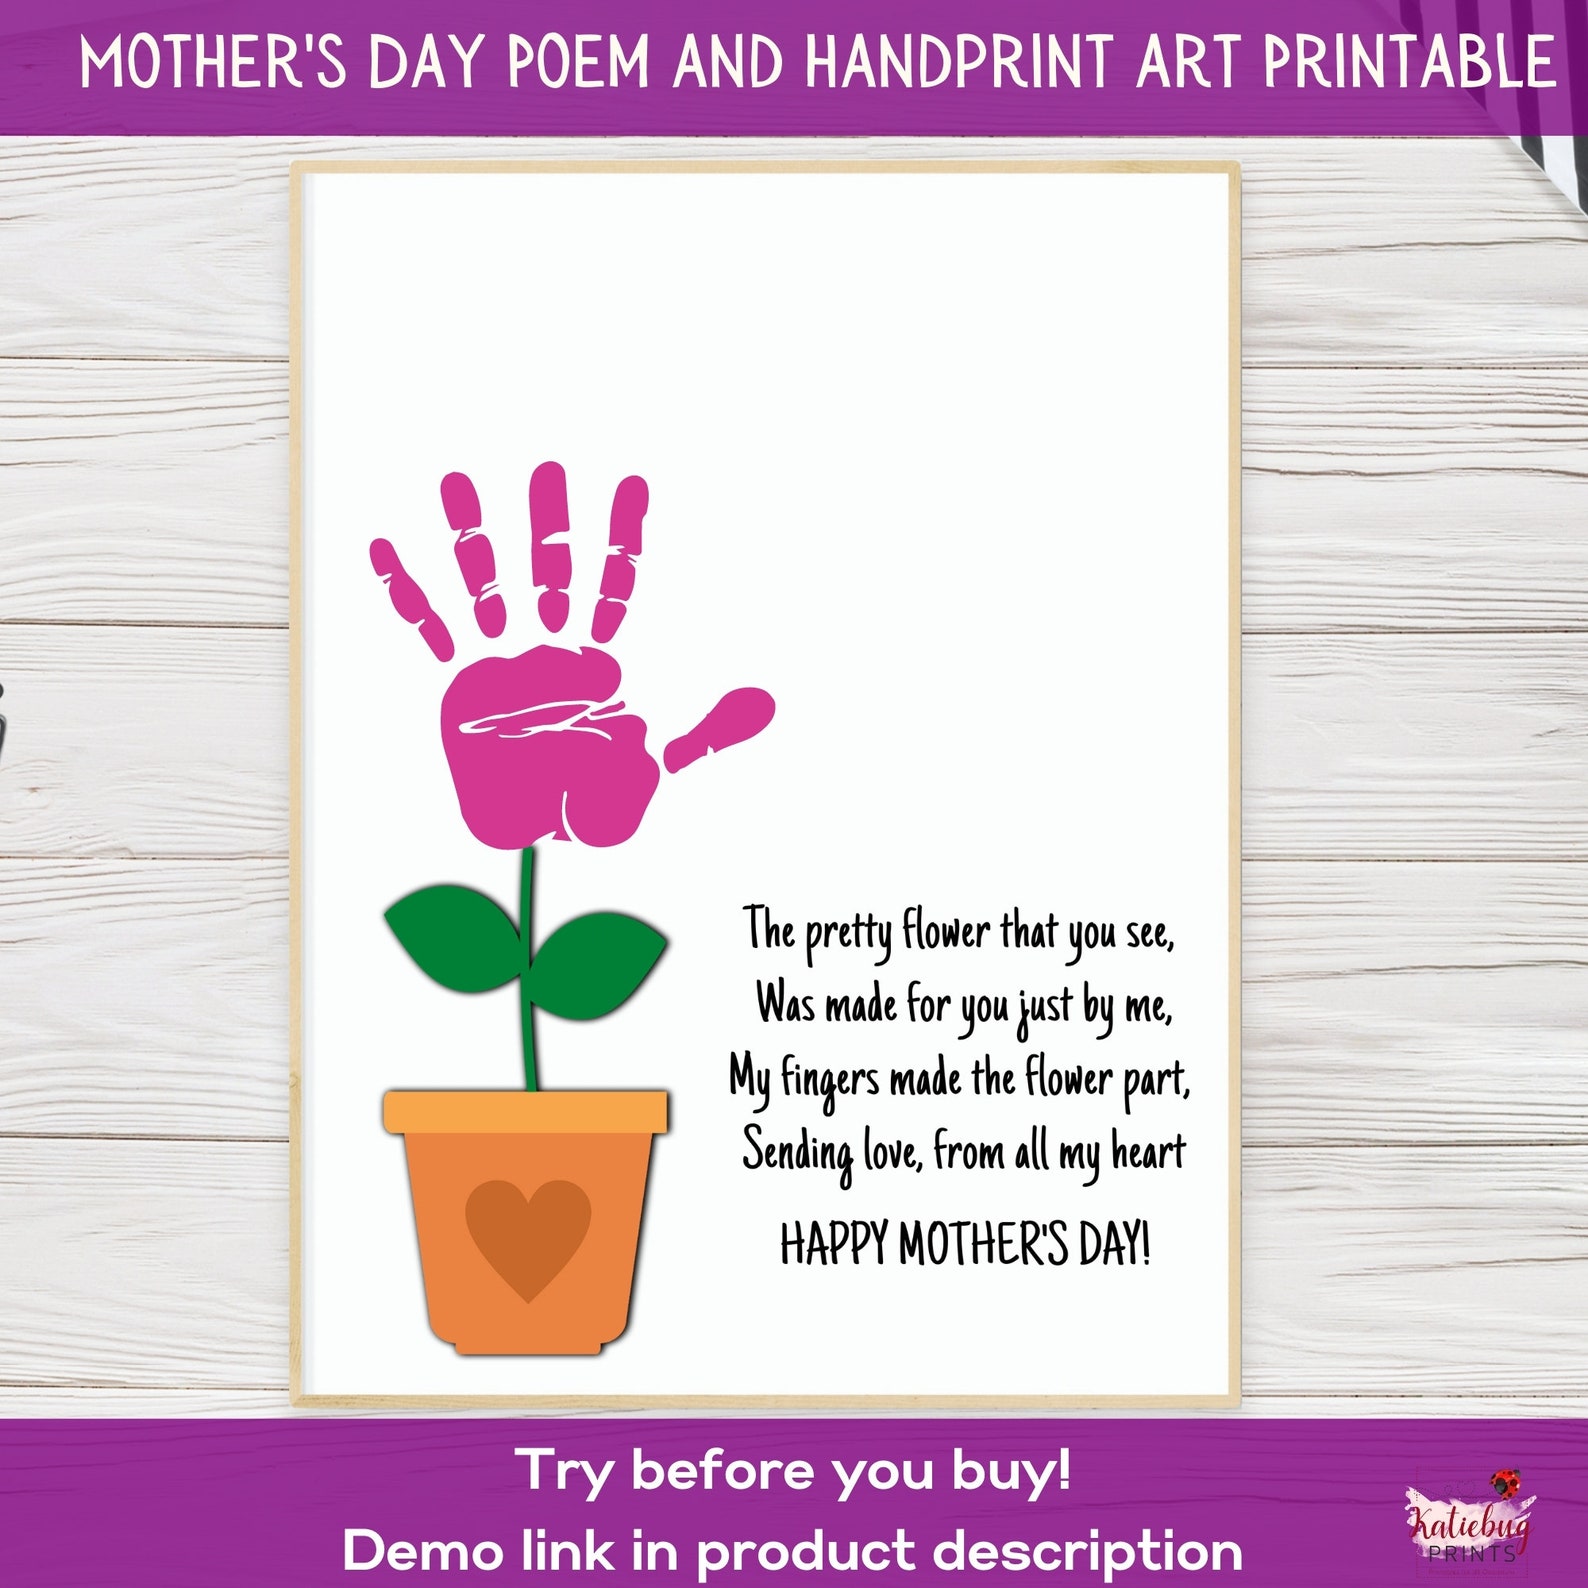 Handprint Art/ Mother's Day Card & Poem Printable/Mom | Etsy